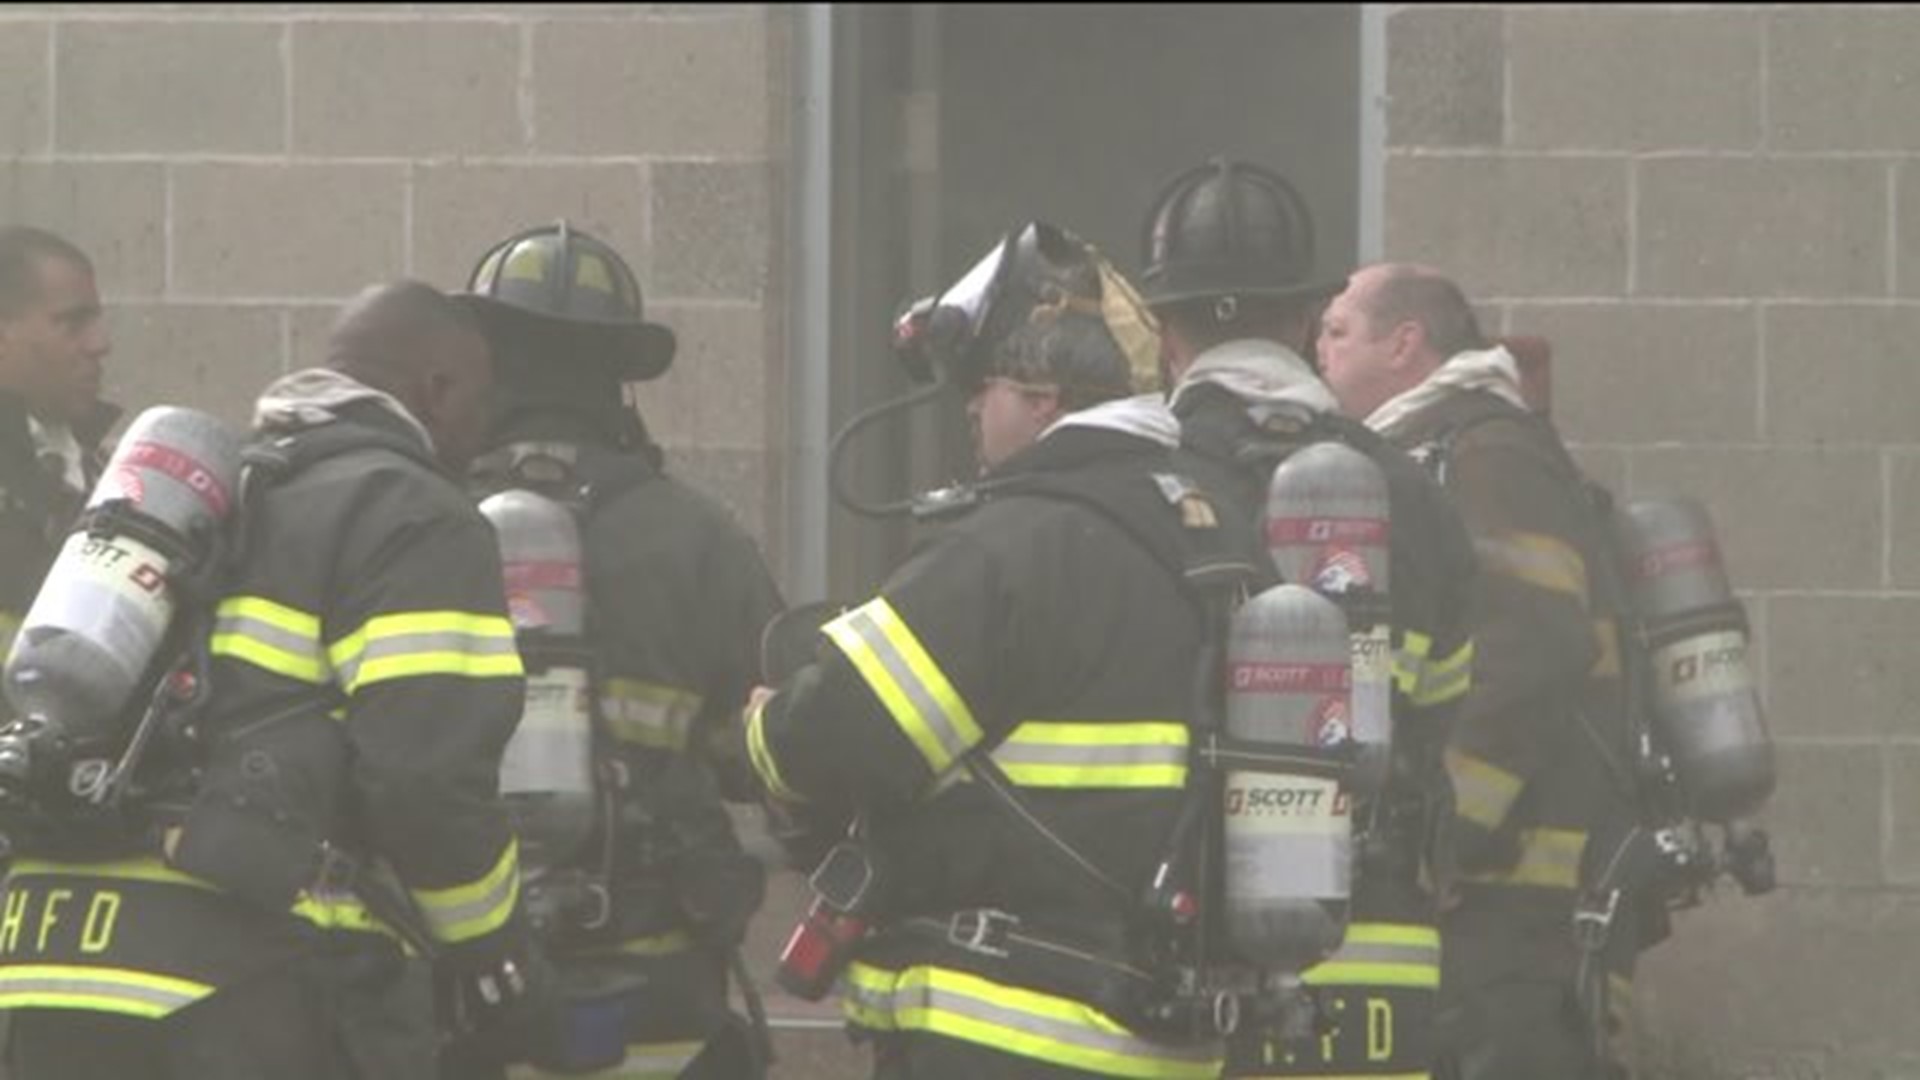 New breathing equipment makes firefighters` jobs safer